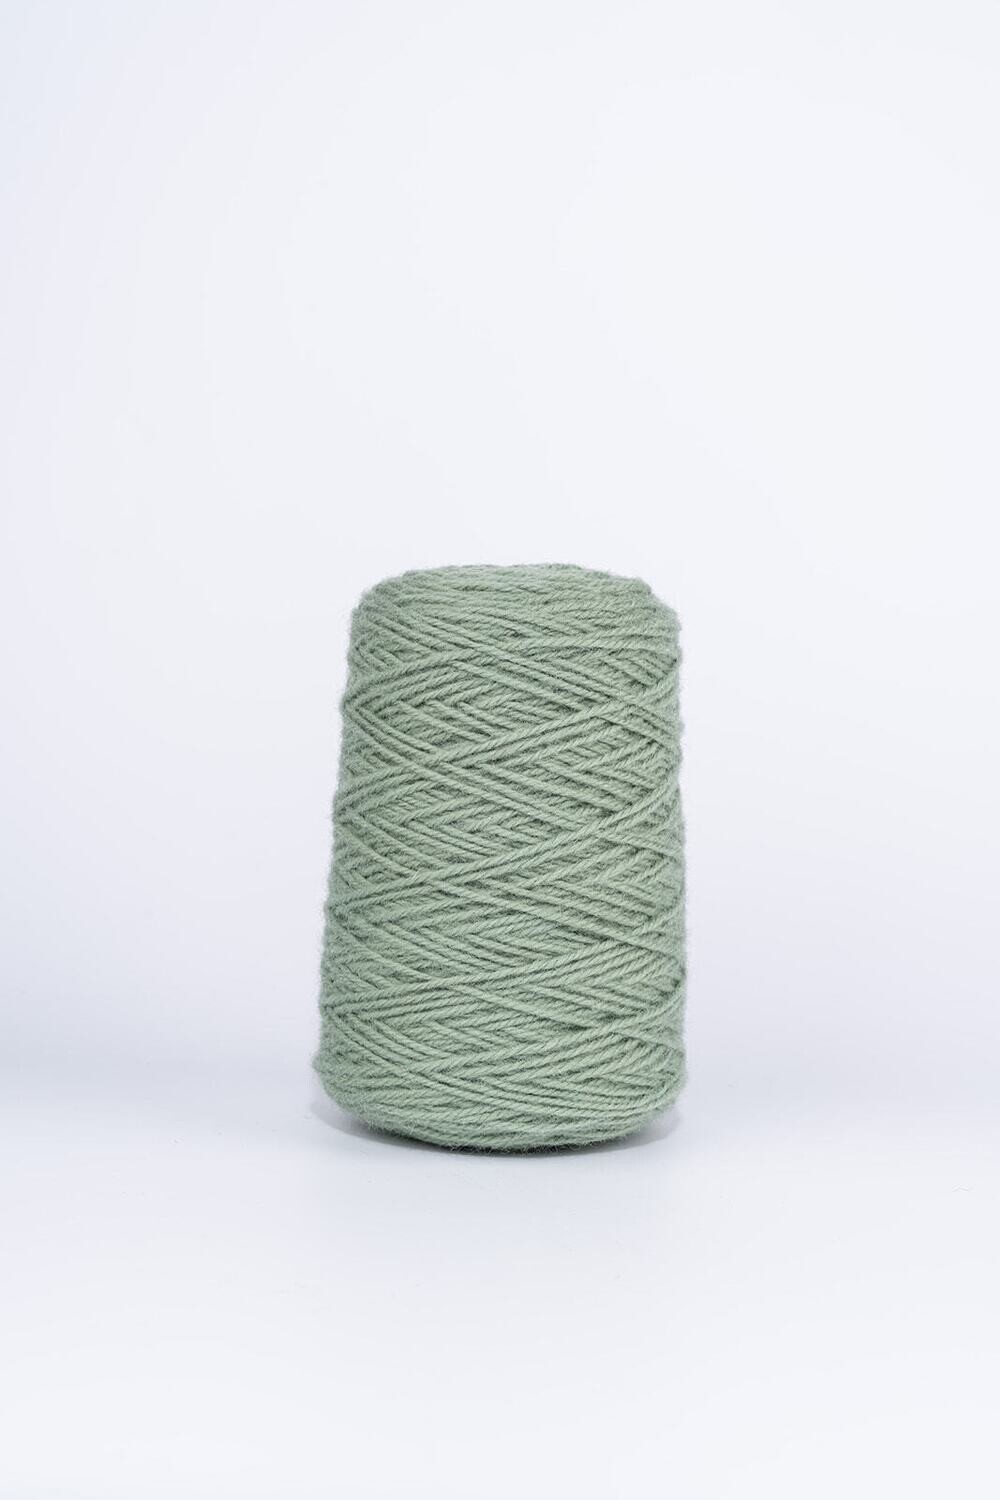 100% Wool Rug Yarn On Cones - Candy Green